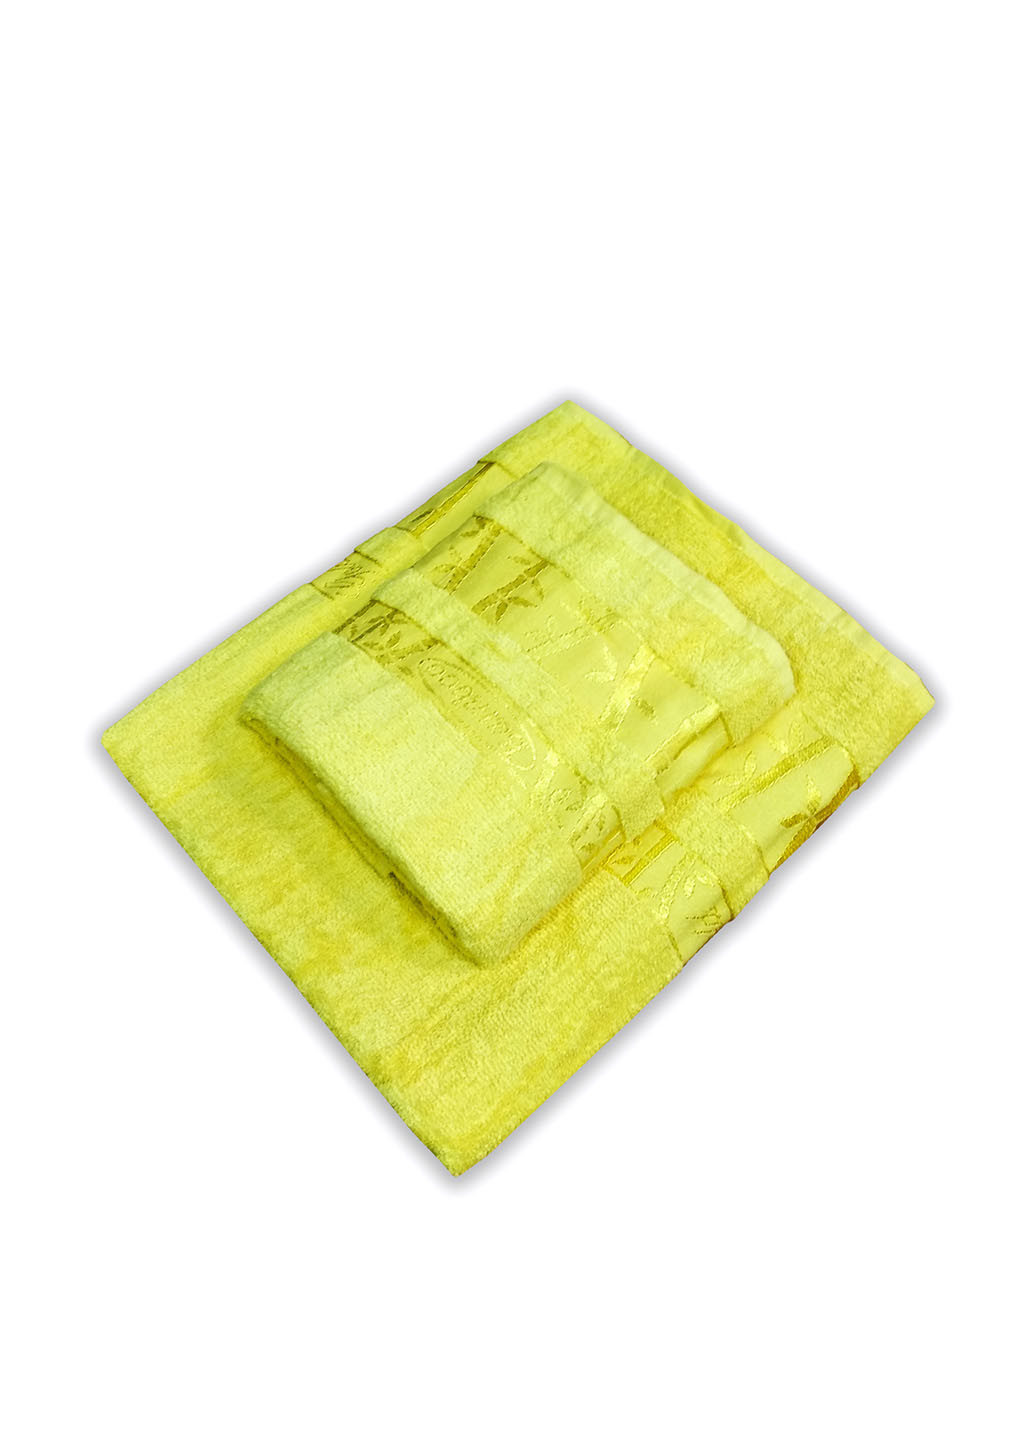 No Brand полотенце, 50х90 см рисунок желтый производство - Турция